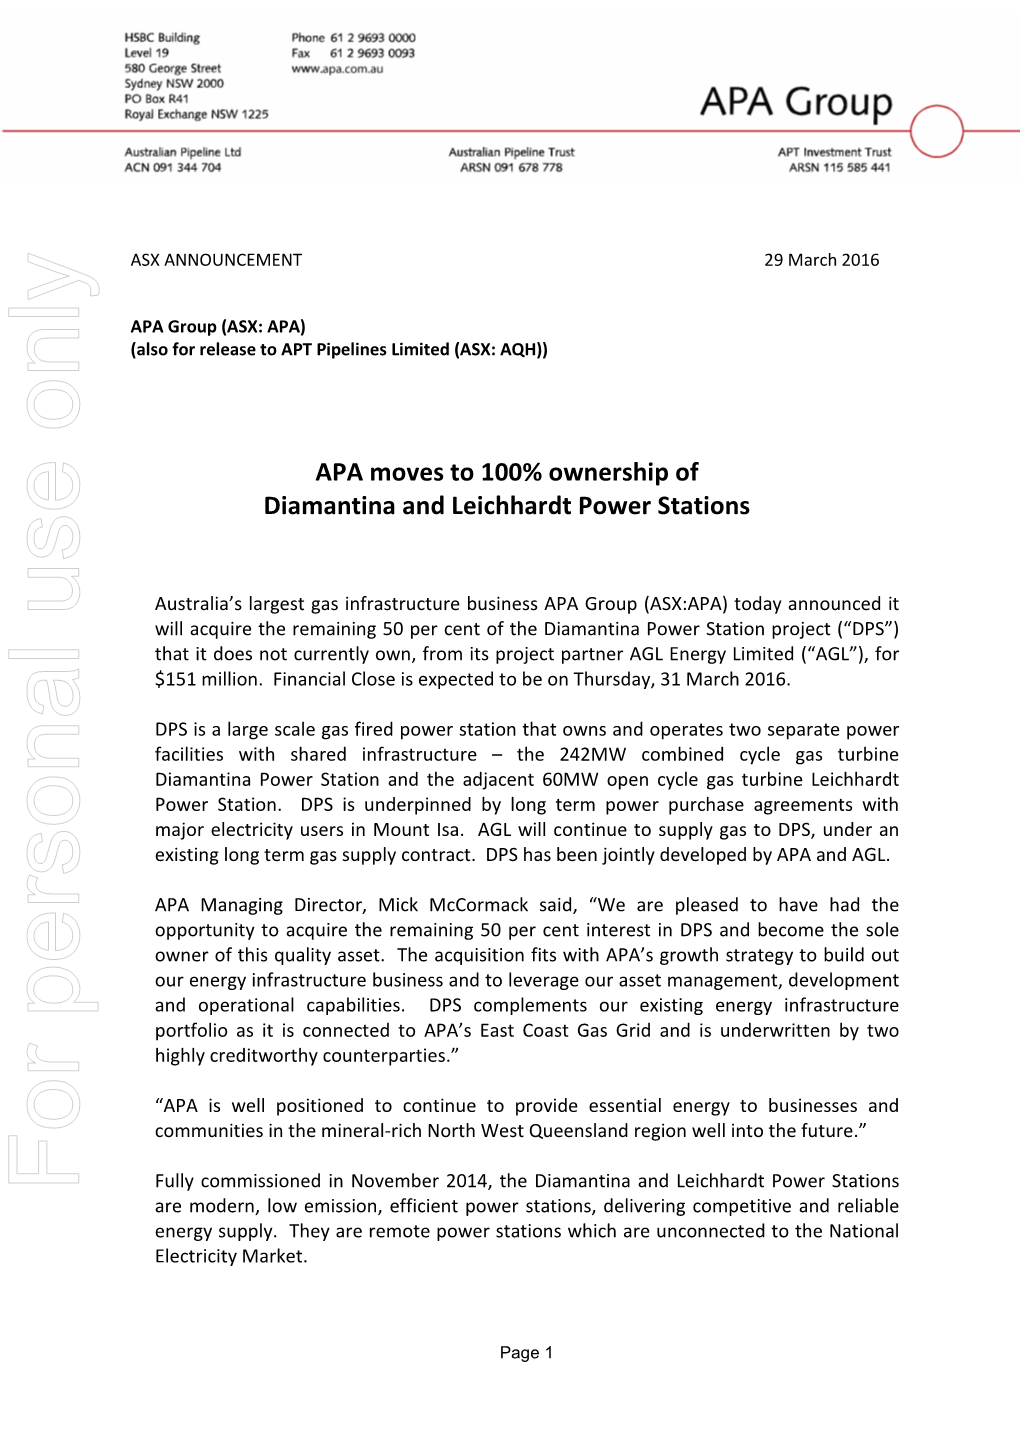 APA Group Letterhead and Follow-On